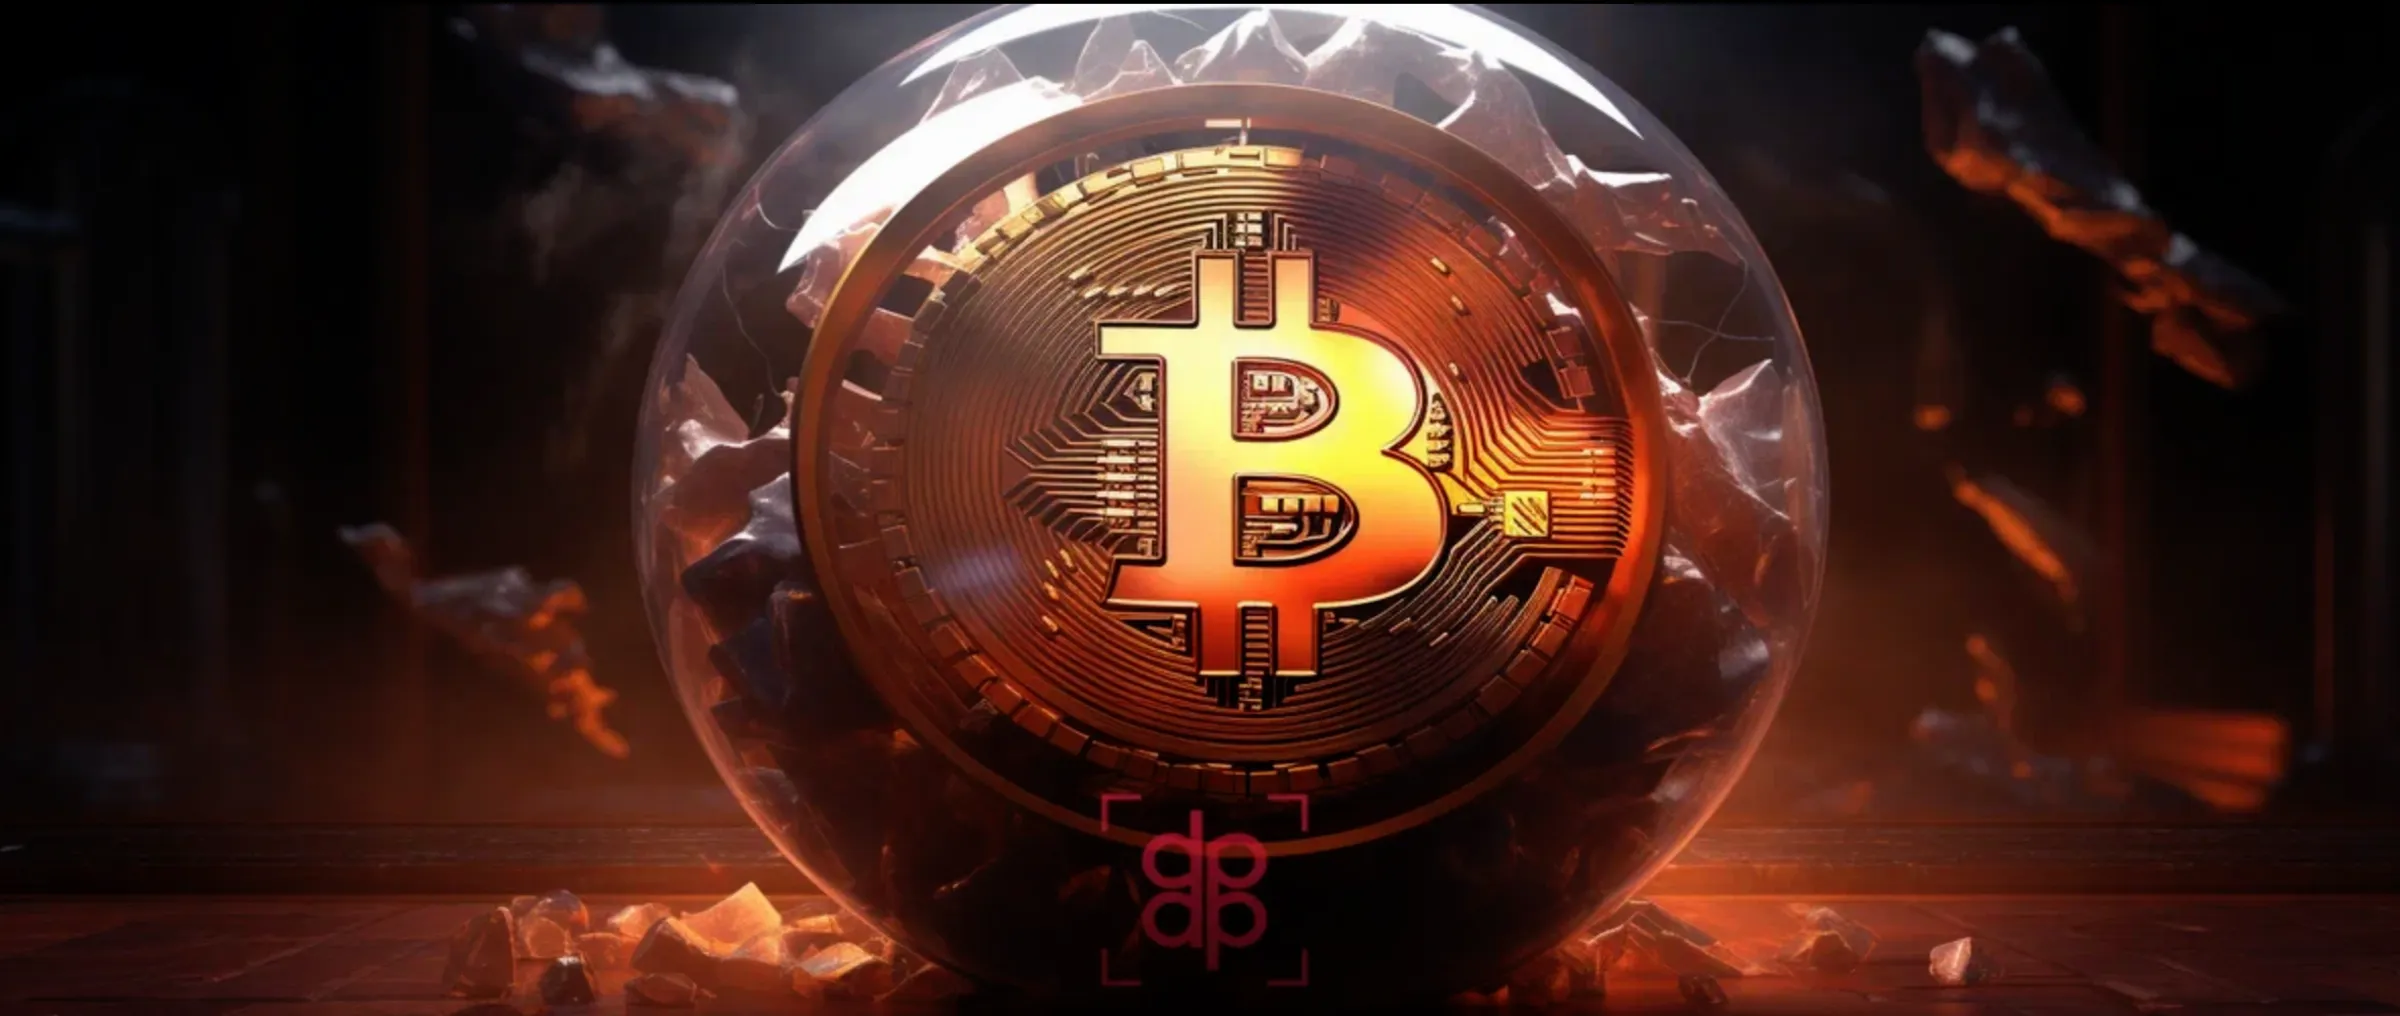 Can Bitcoin Cash regain its position?